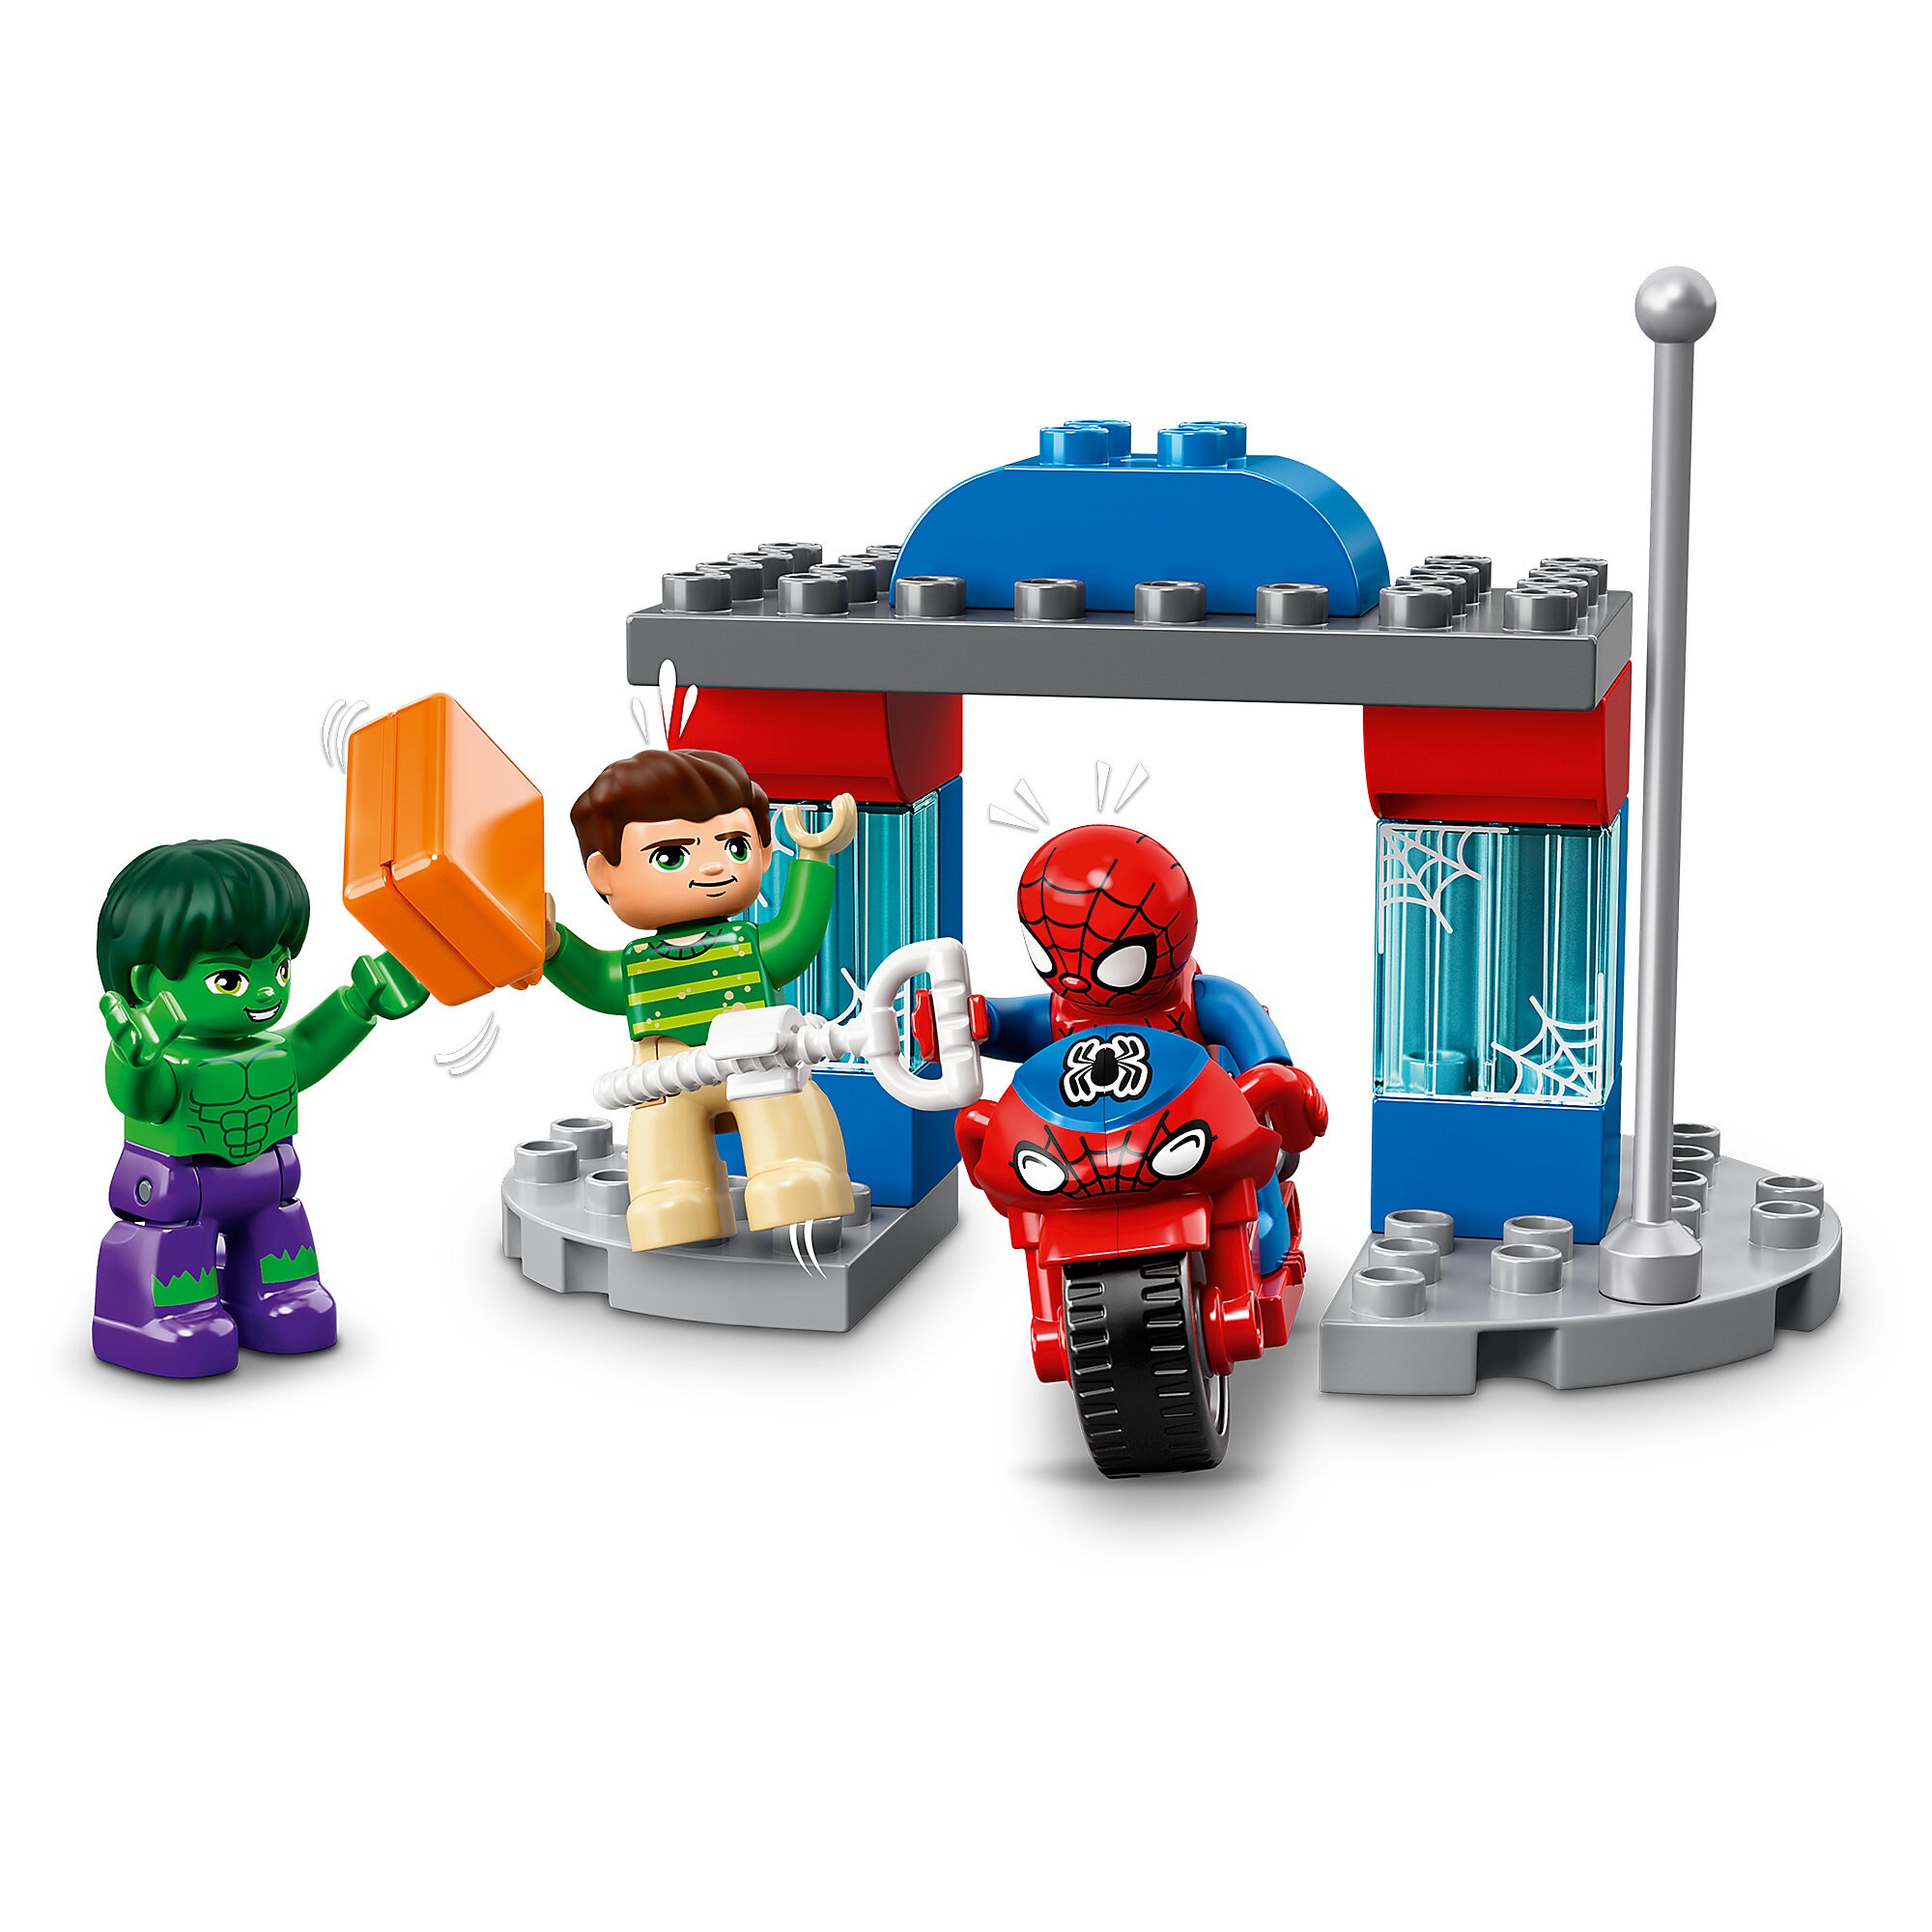 Spider-Man & Hulk Adventures LEGO Duplo Playset now out – Dis ...